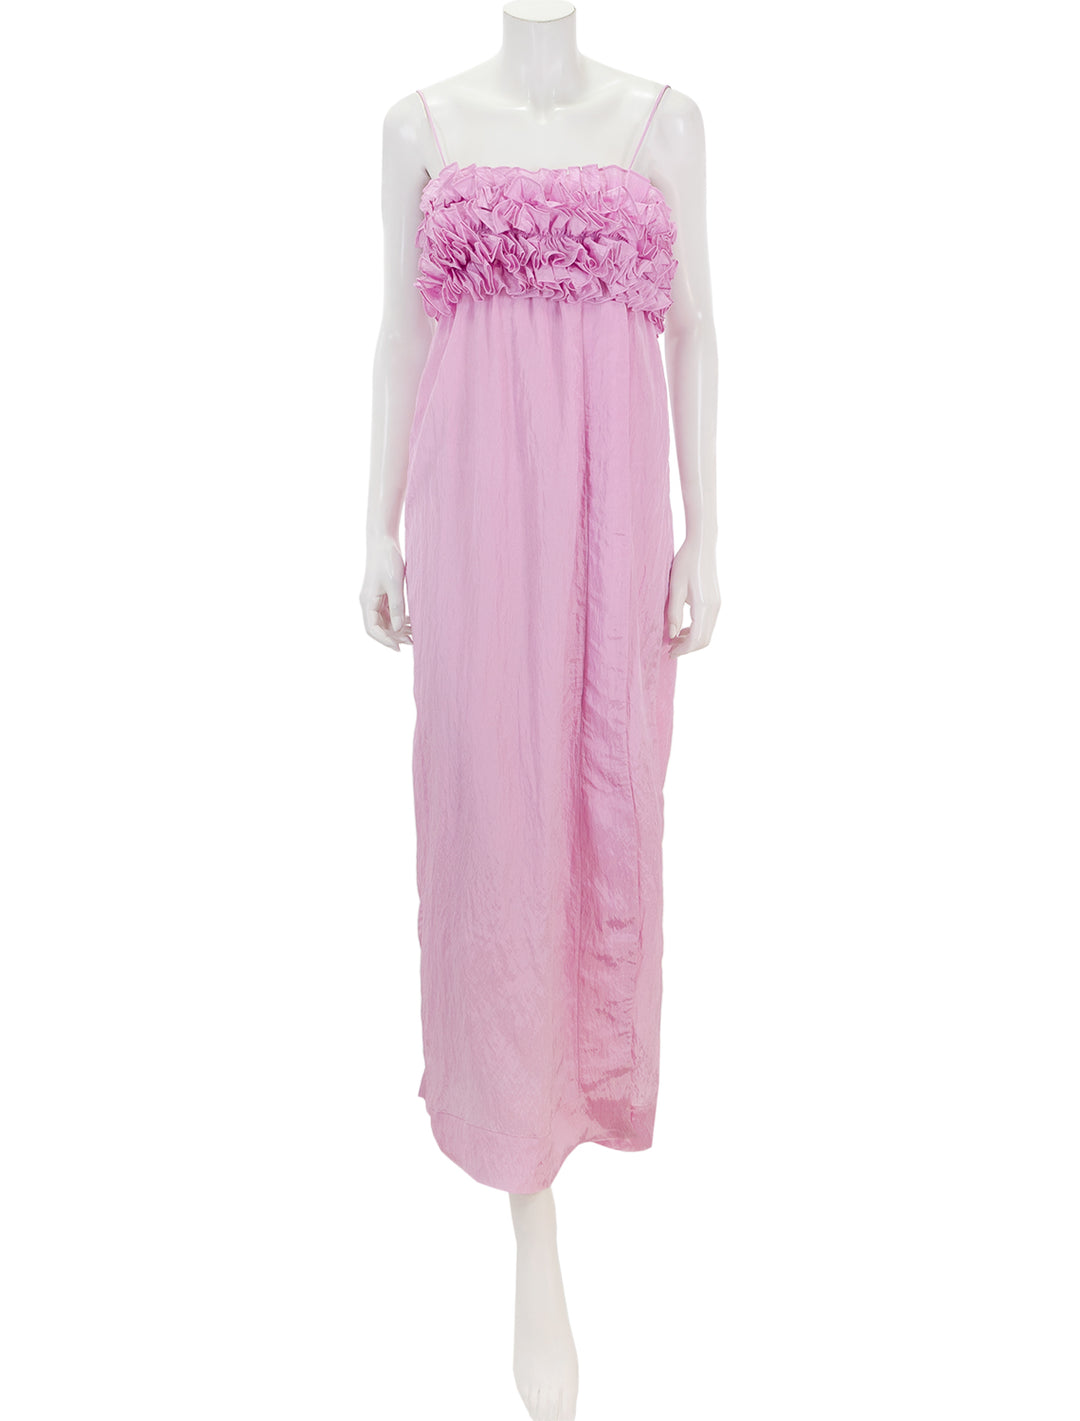 Front view of Ganni's shiny tech strap midi dress in lilac sachet.